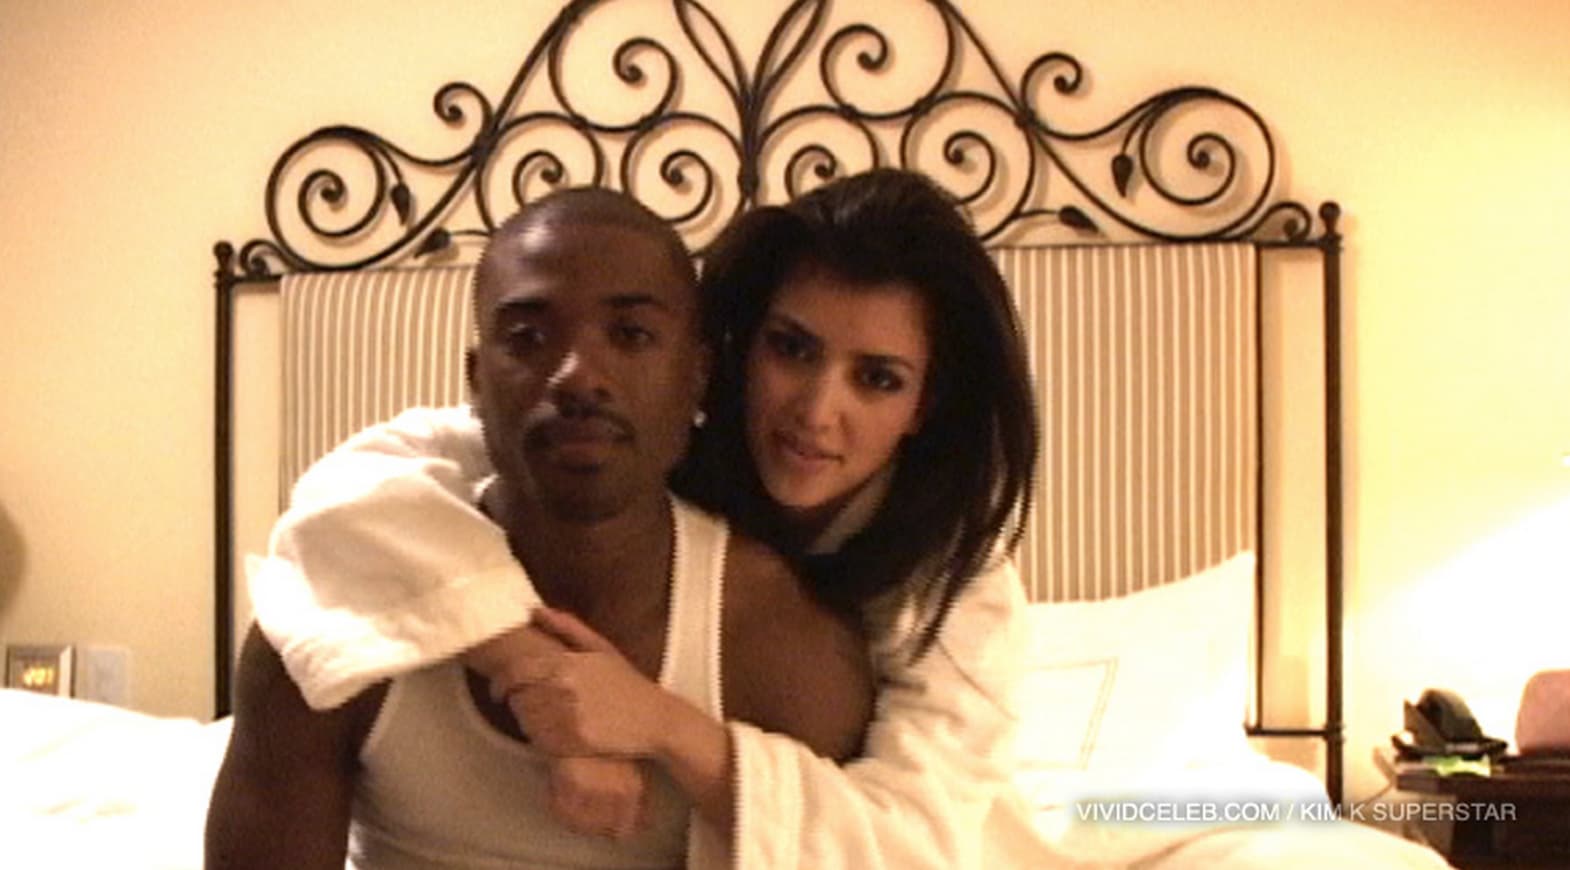 Kim kardashian and ray j sex tape full video